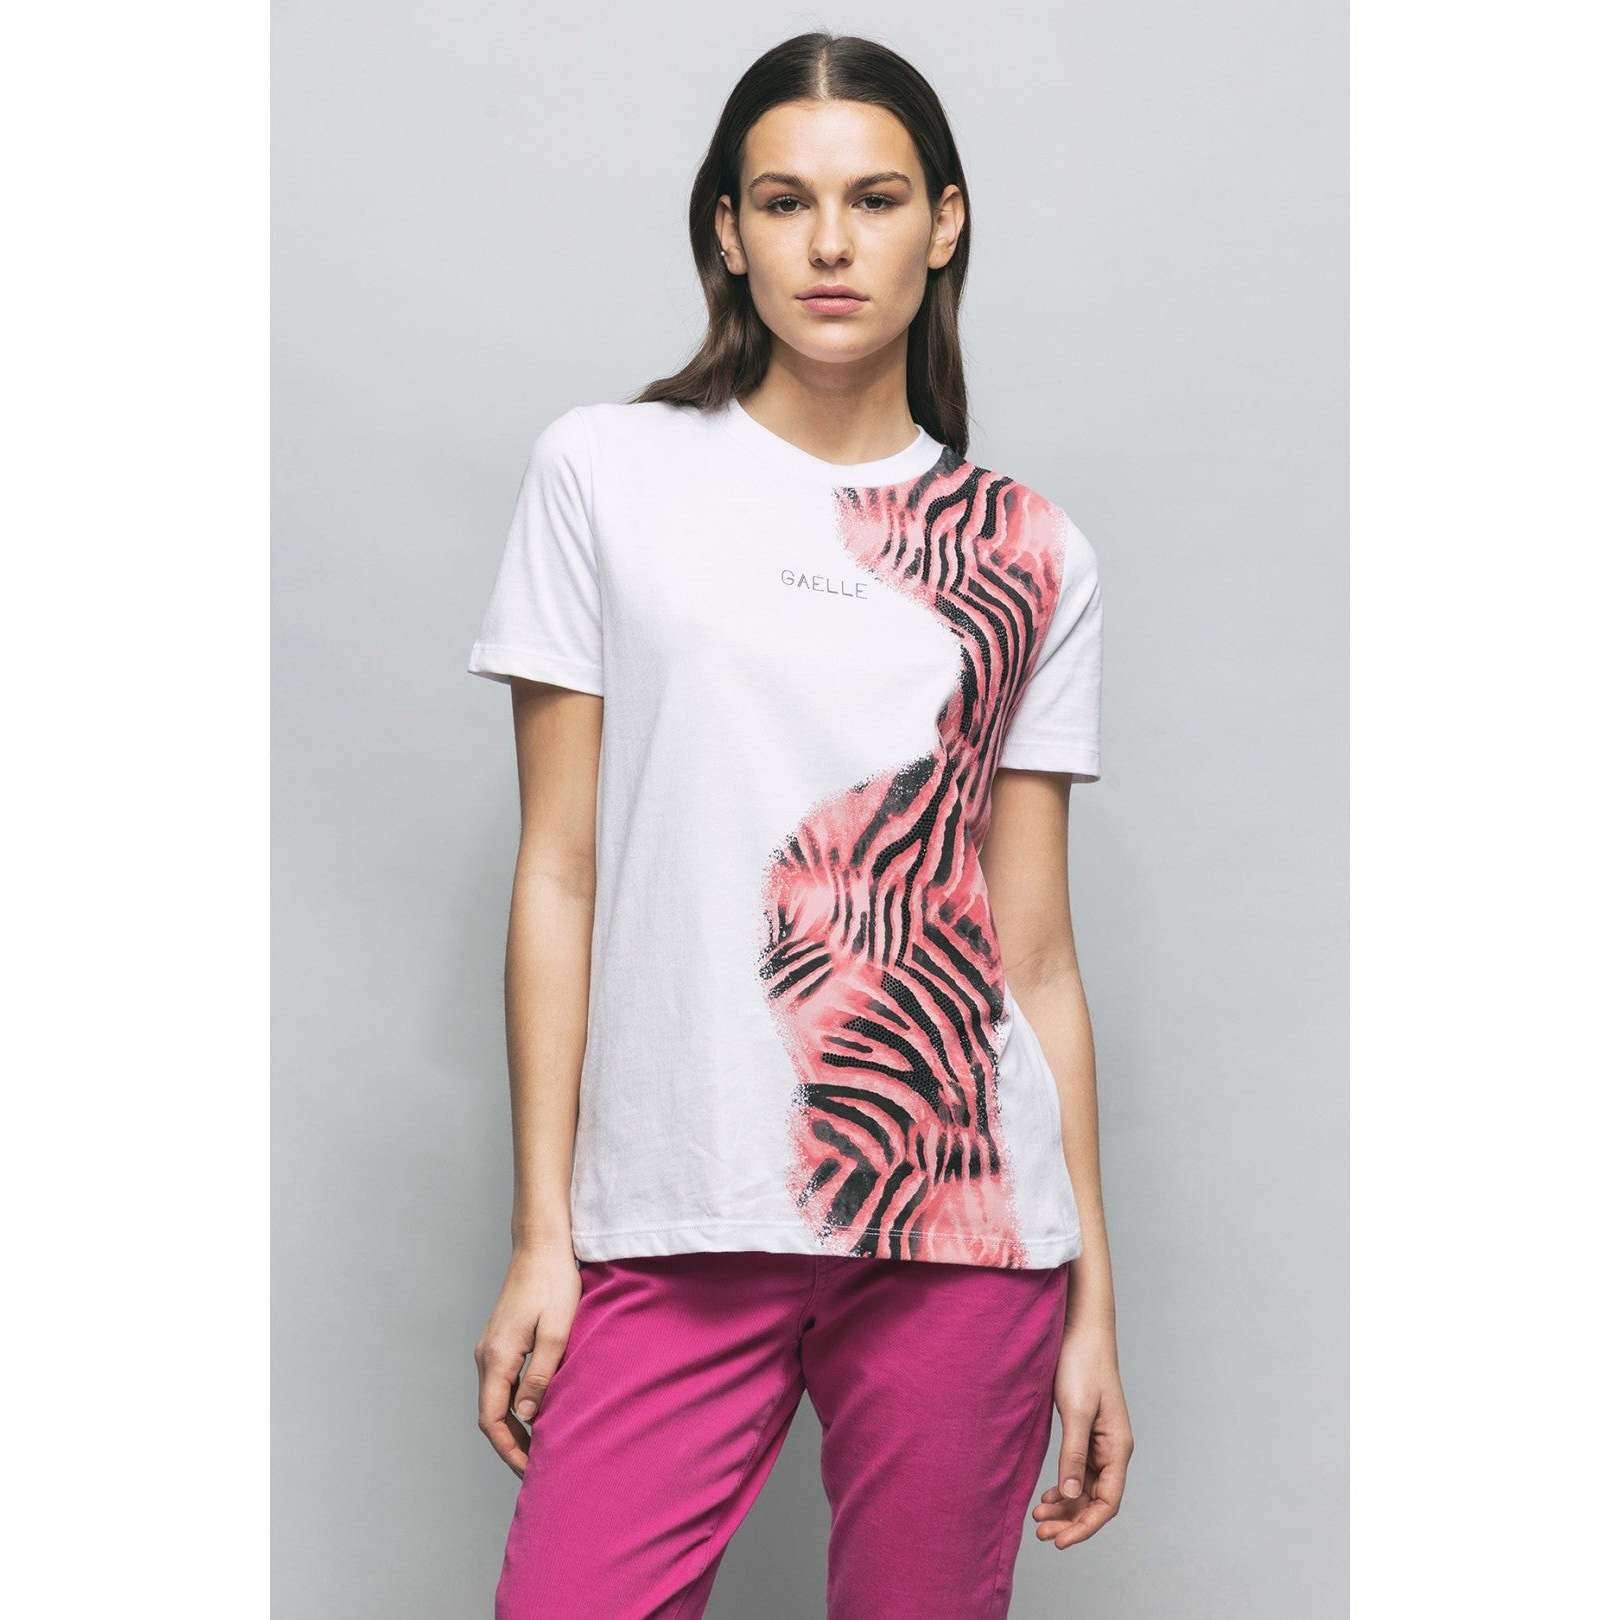 Gaelle Donna T-shirt Bianca con Stampa Rosa GBDP17070